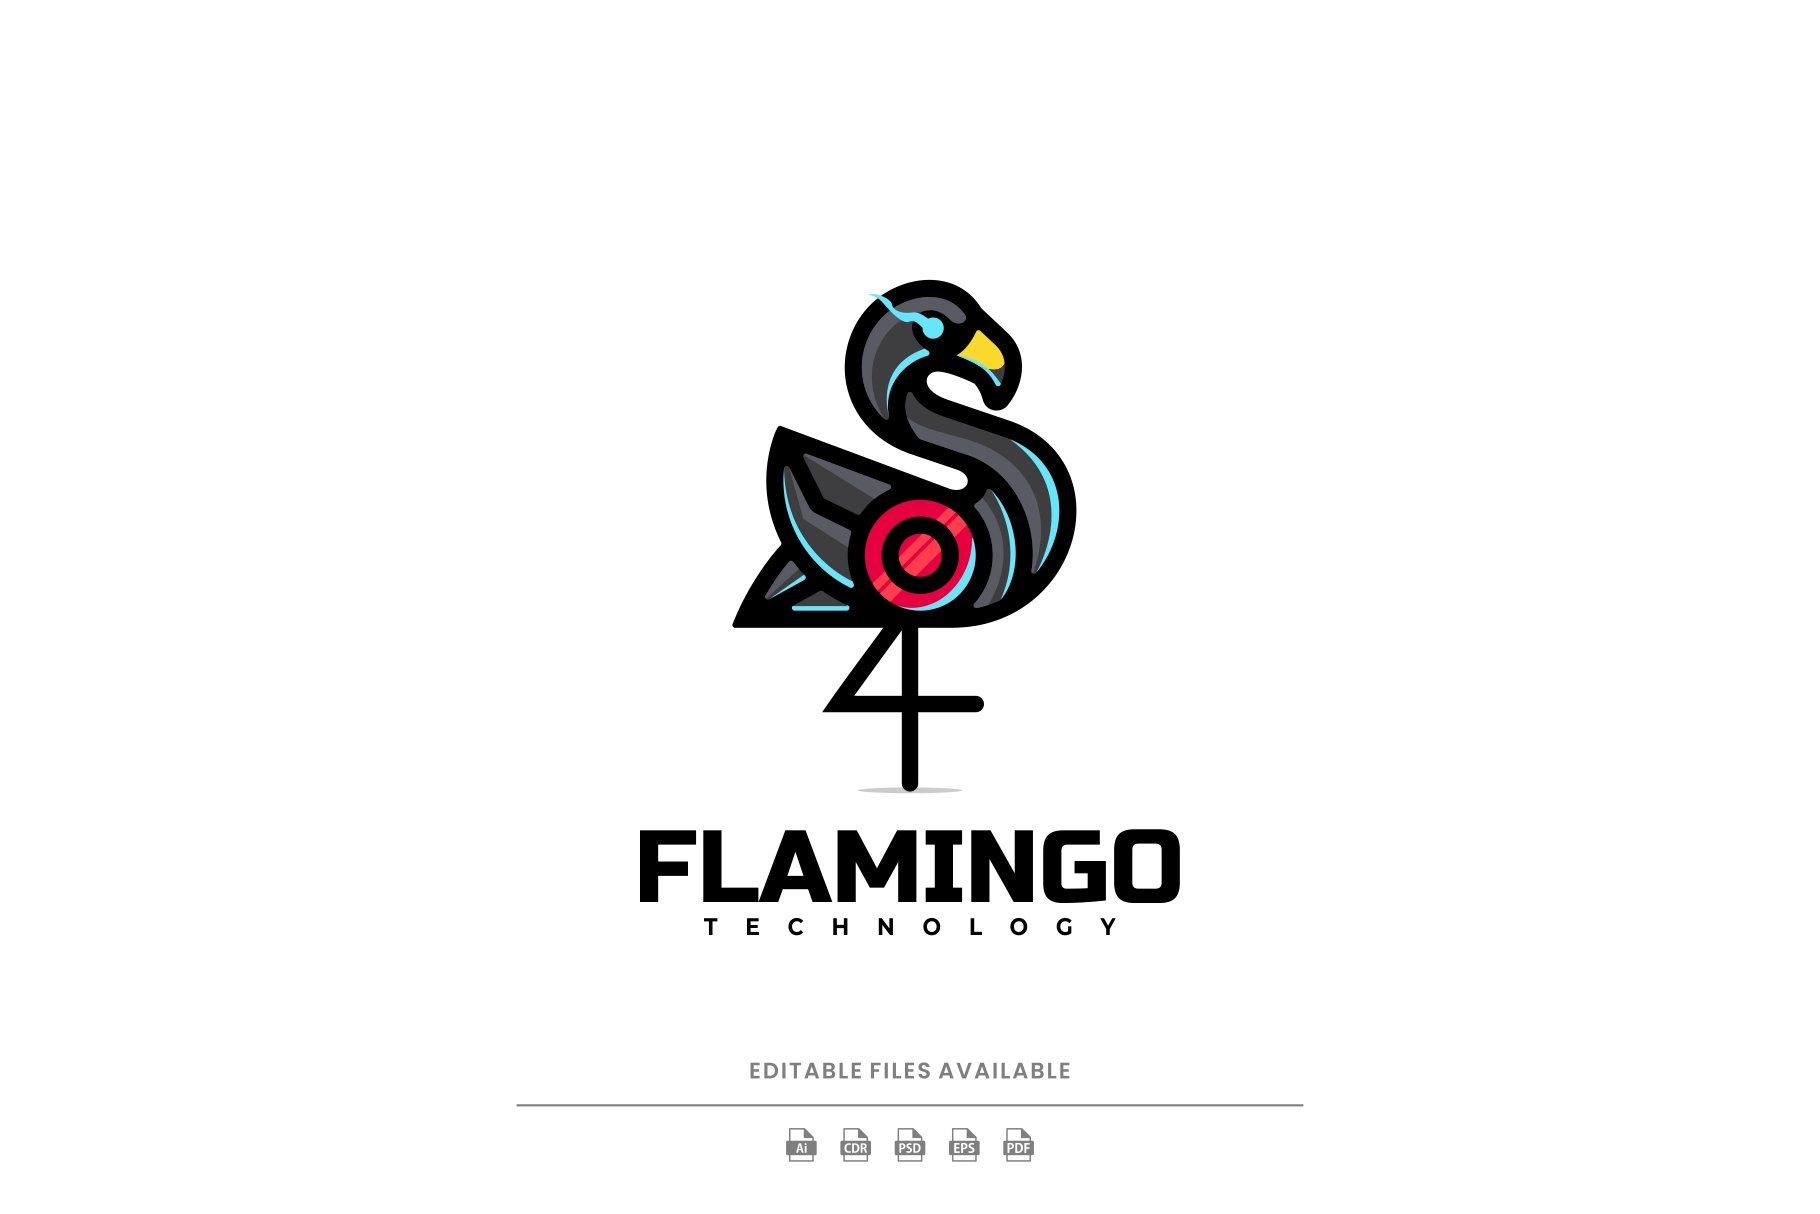 Flamingo Robot Simple Mascot Logo cover image.